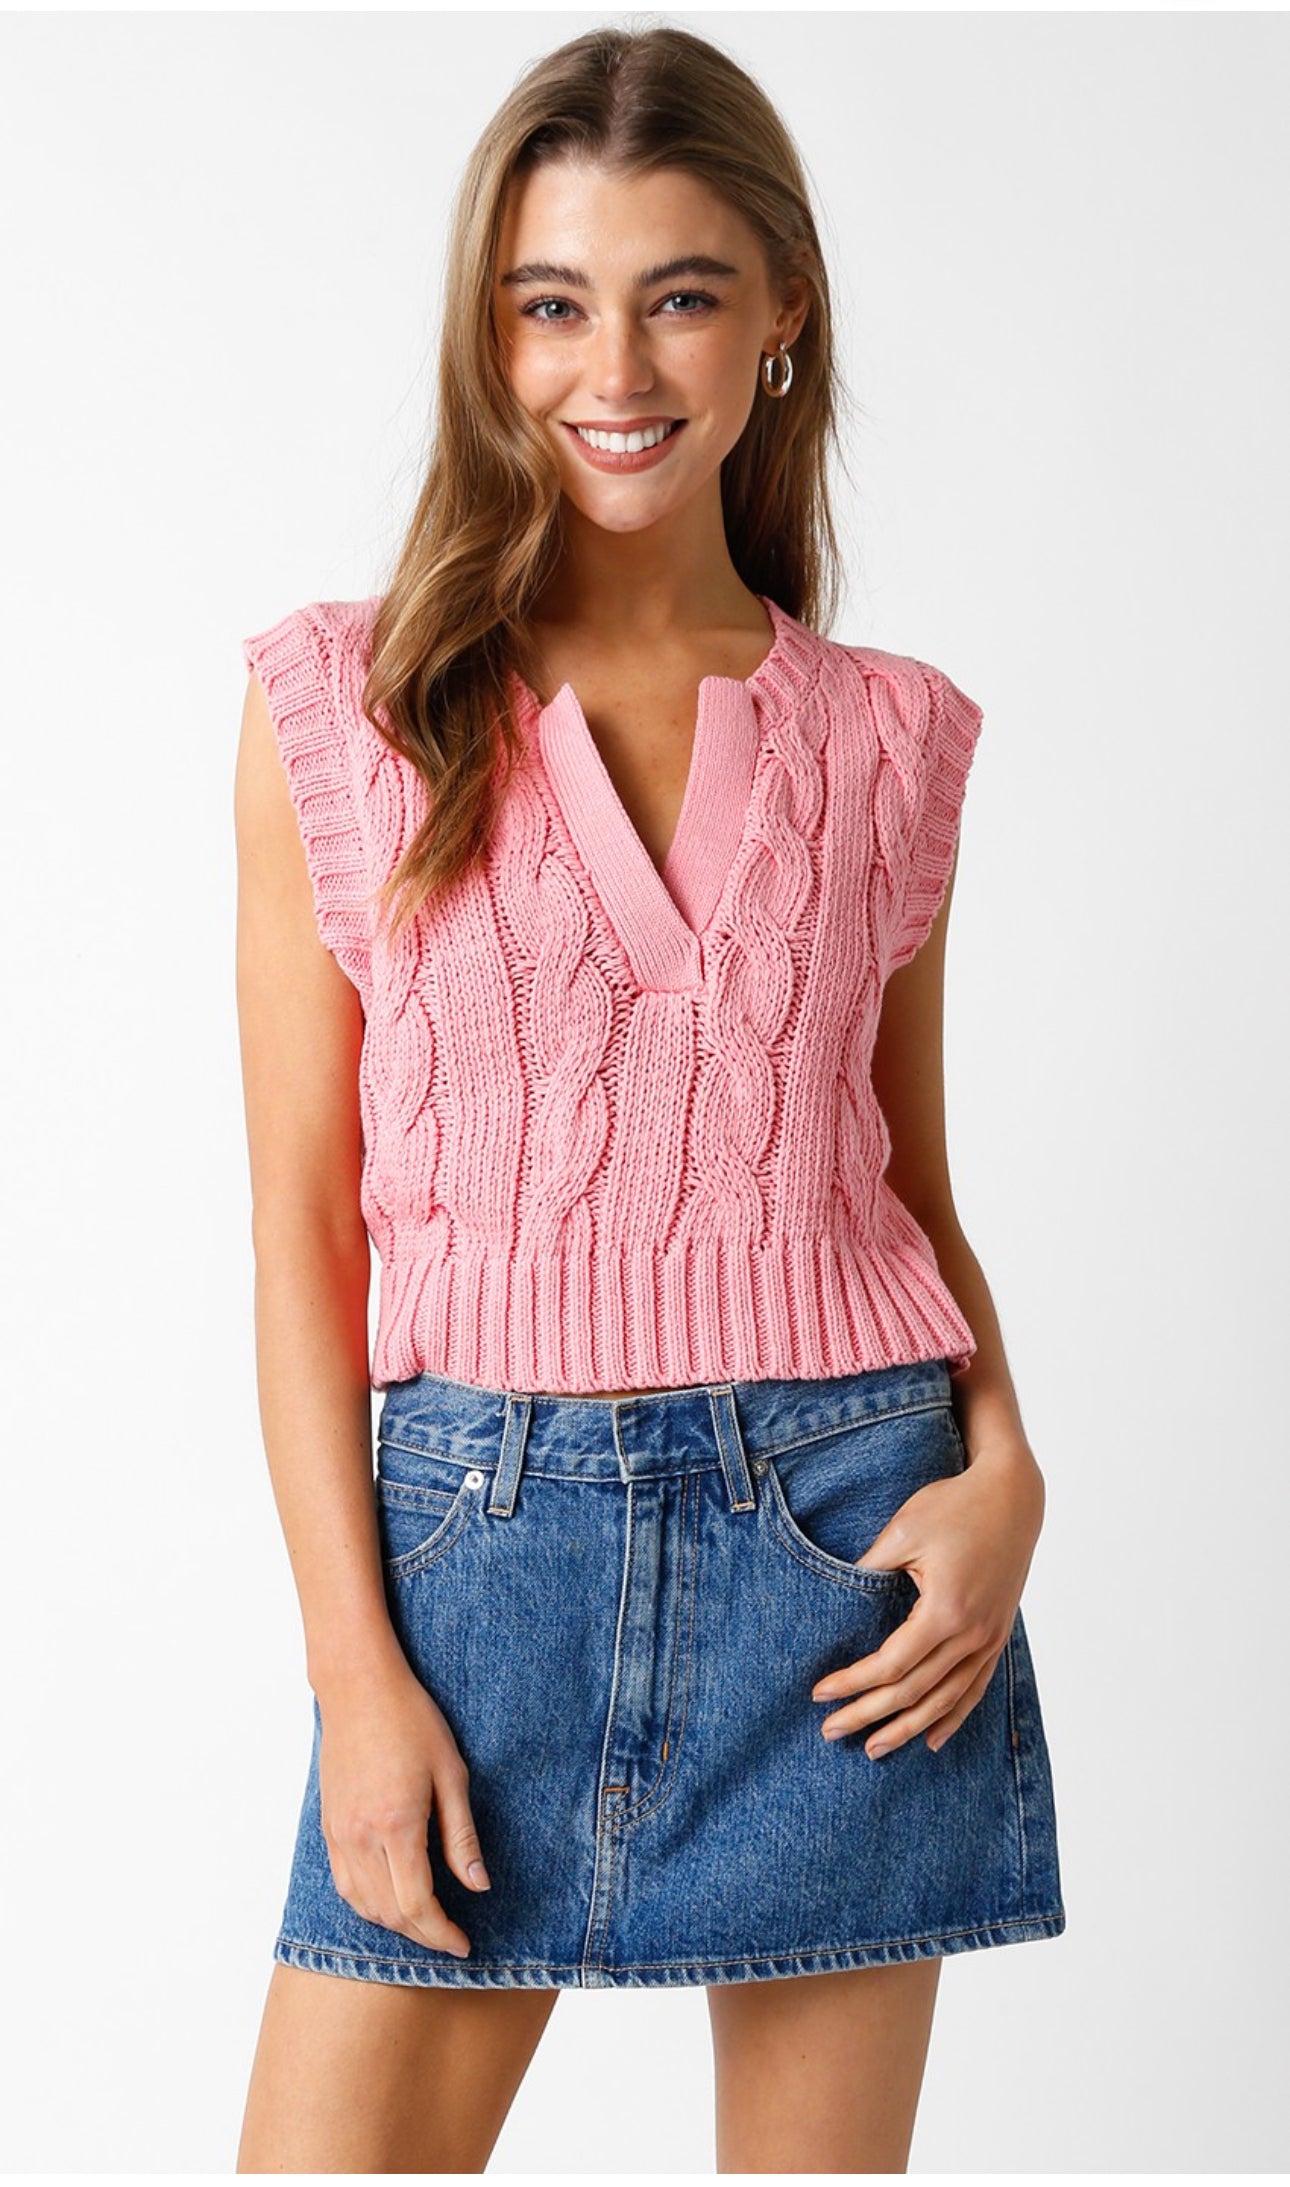 Simple style sweater vest